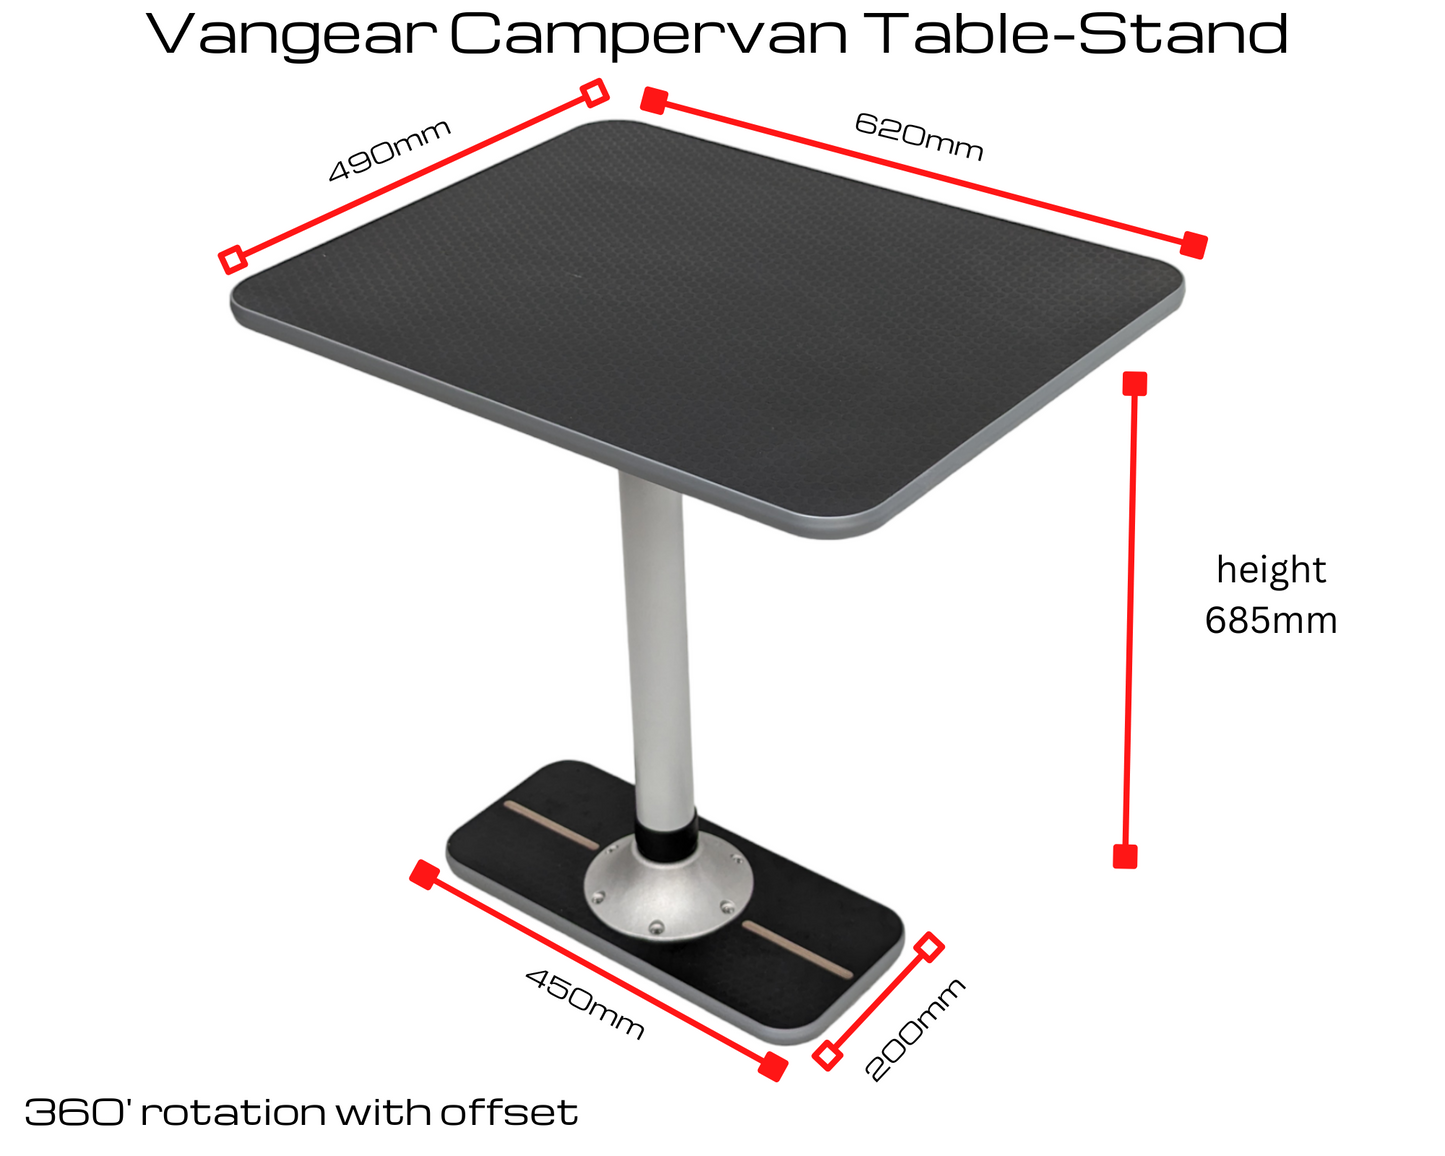 Vangear campervan table & stand